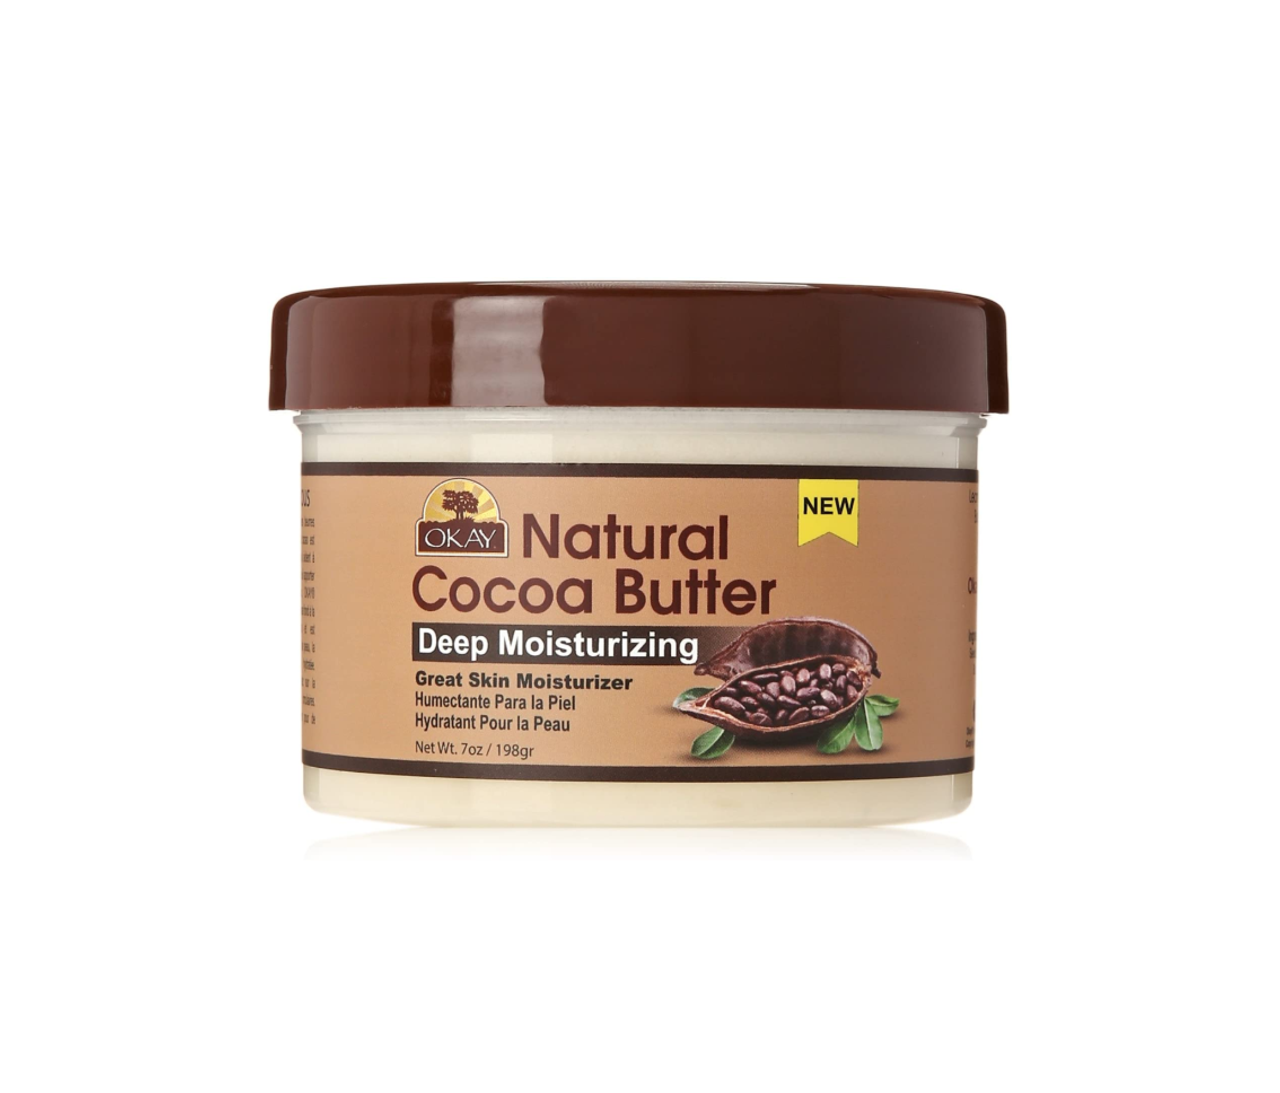 Okay Natural's 100% Natural Cocoa Butter Smooth 198g